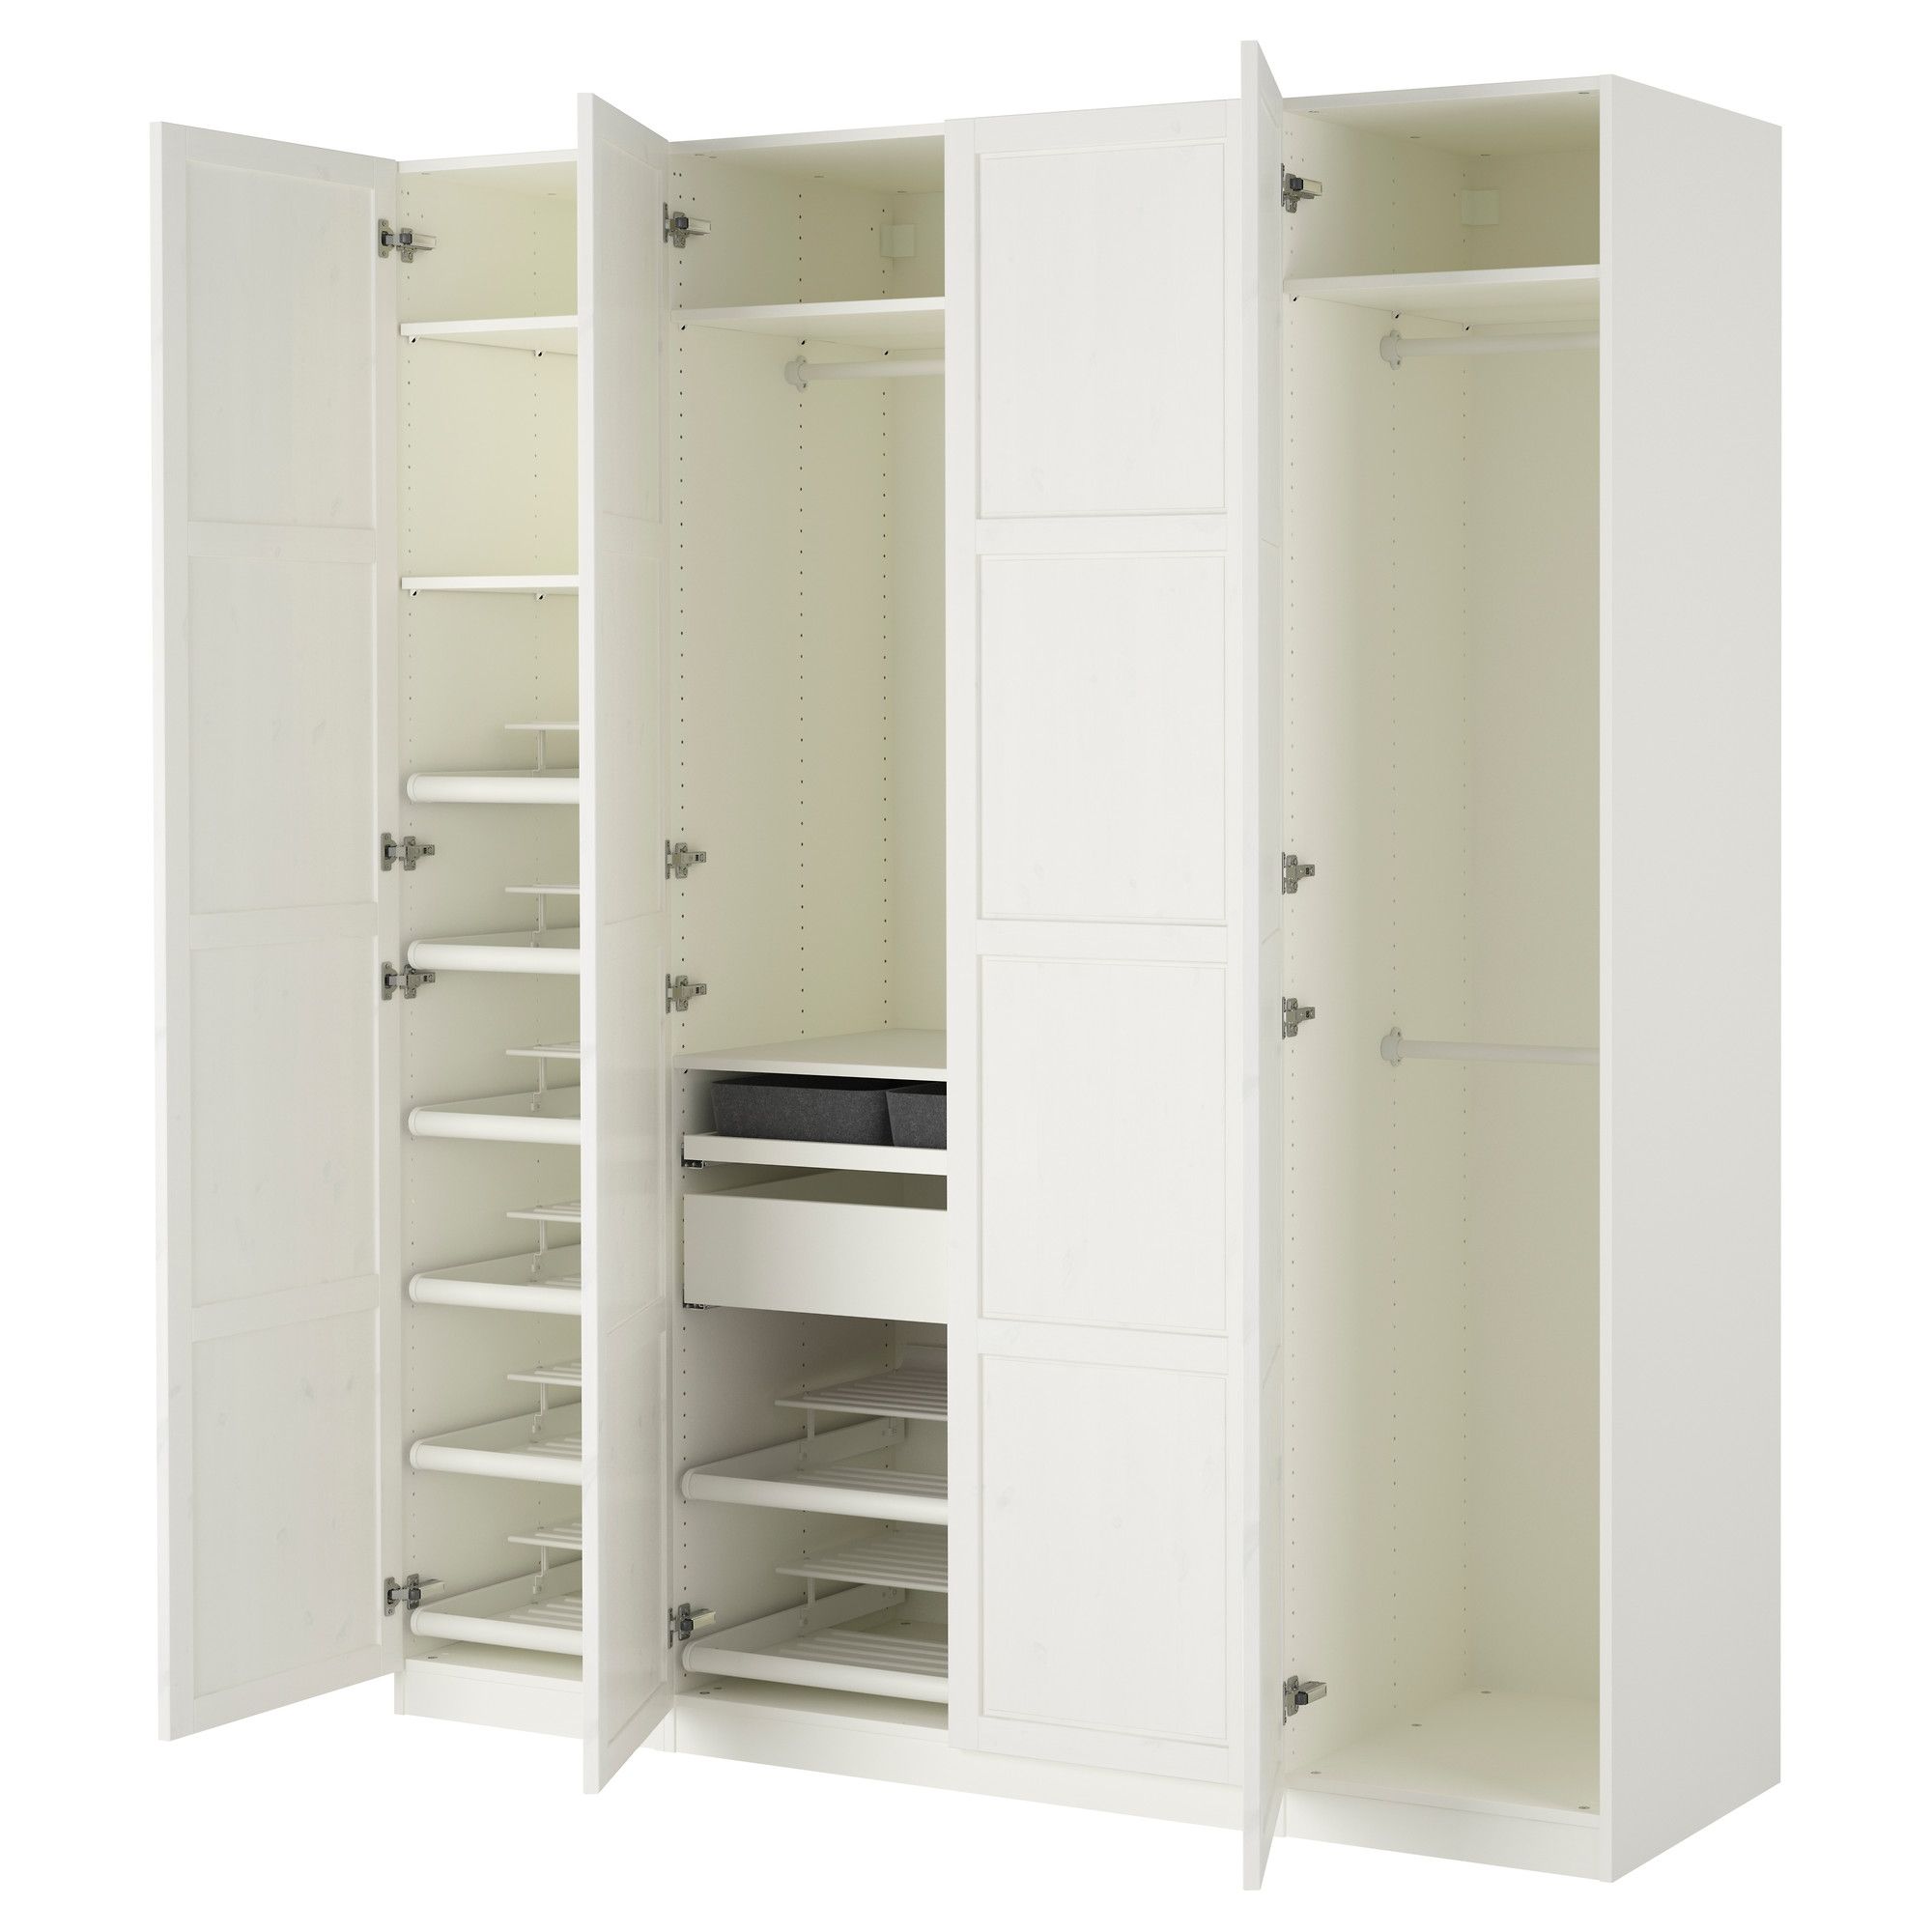 Wardrobes Pax System Ikea Intended For Corner Wardrobe Closet IKEA (Photo 14 of 25)